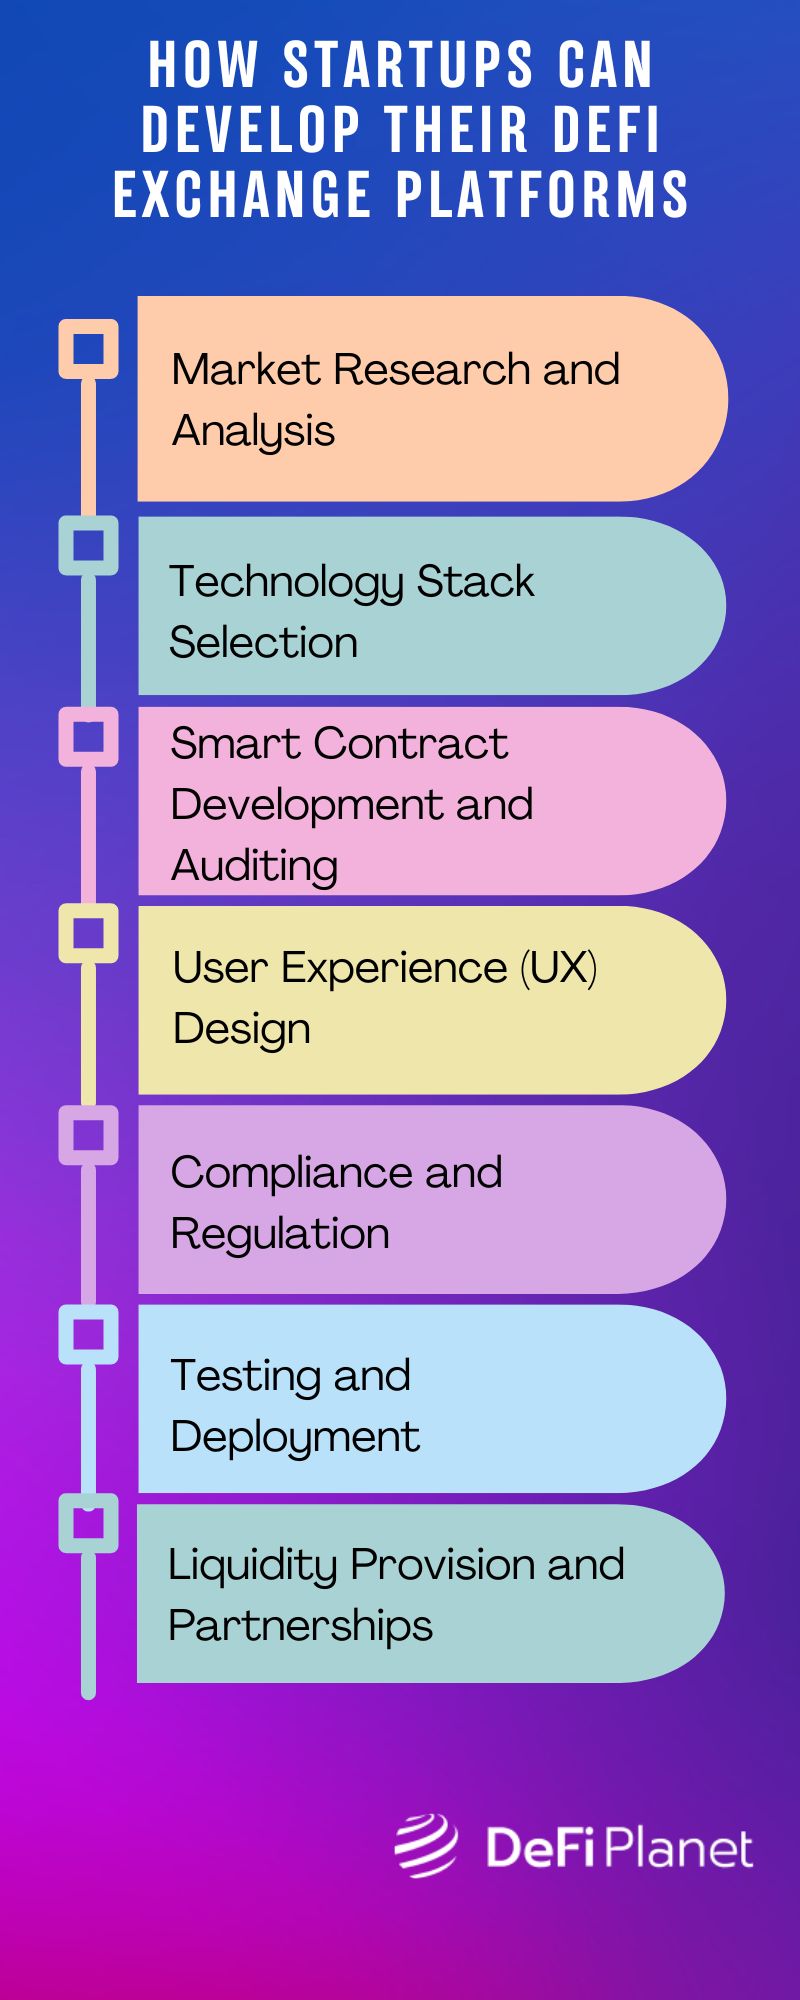 Image on DeFi Planet showing steps to take to develop DeFi exchange platforms for startups.